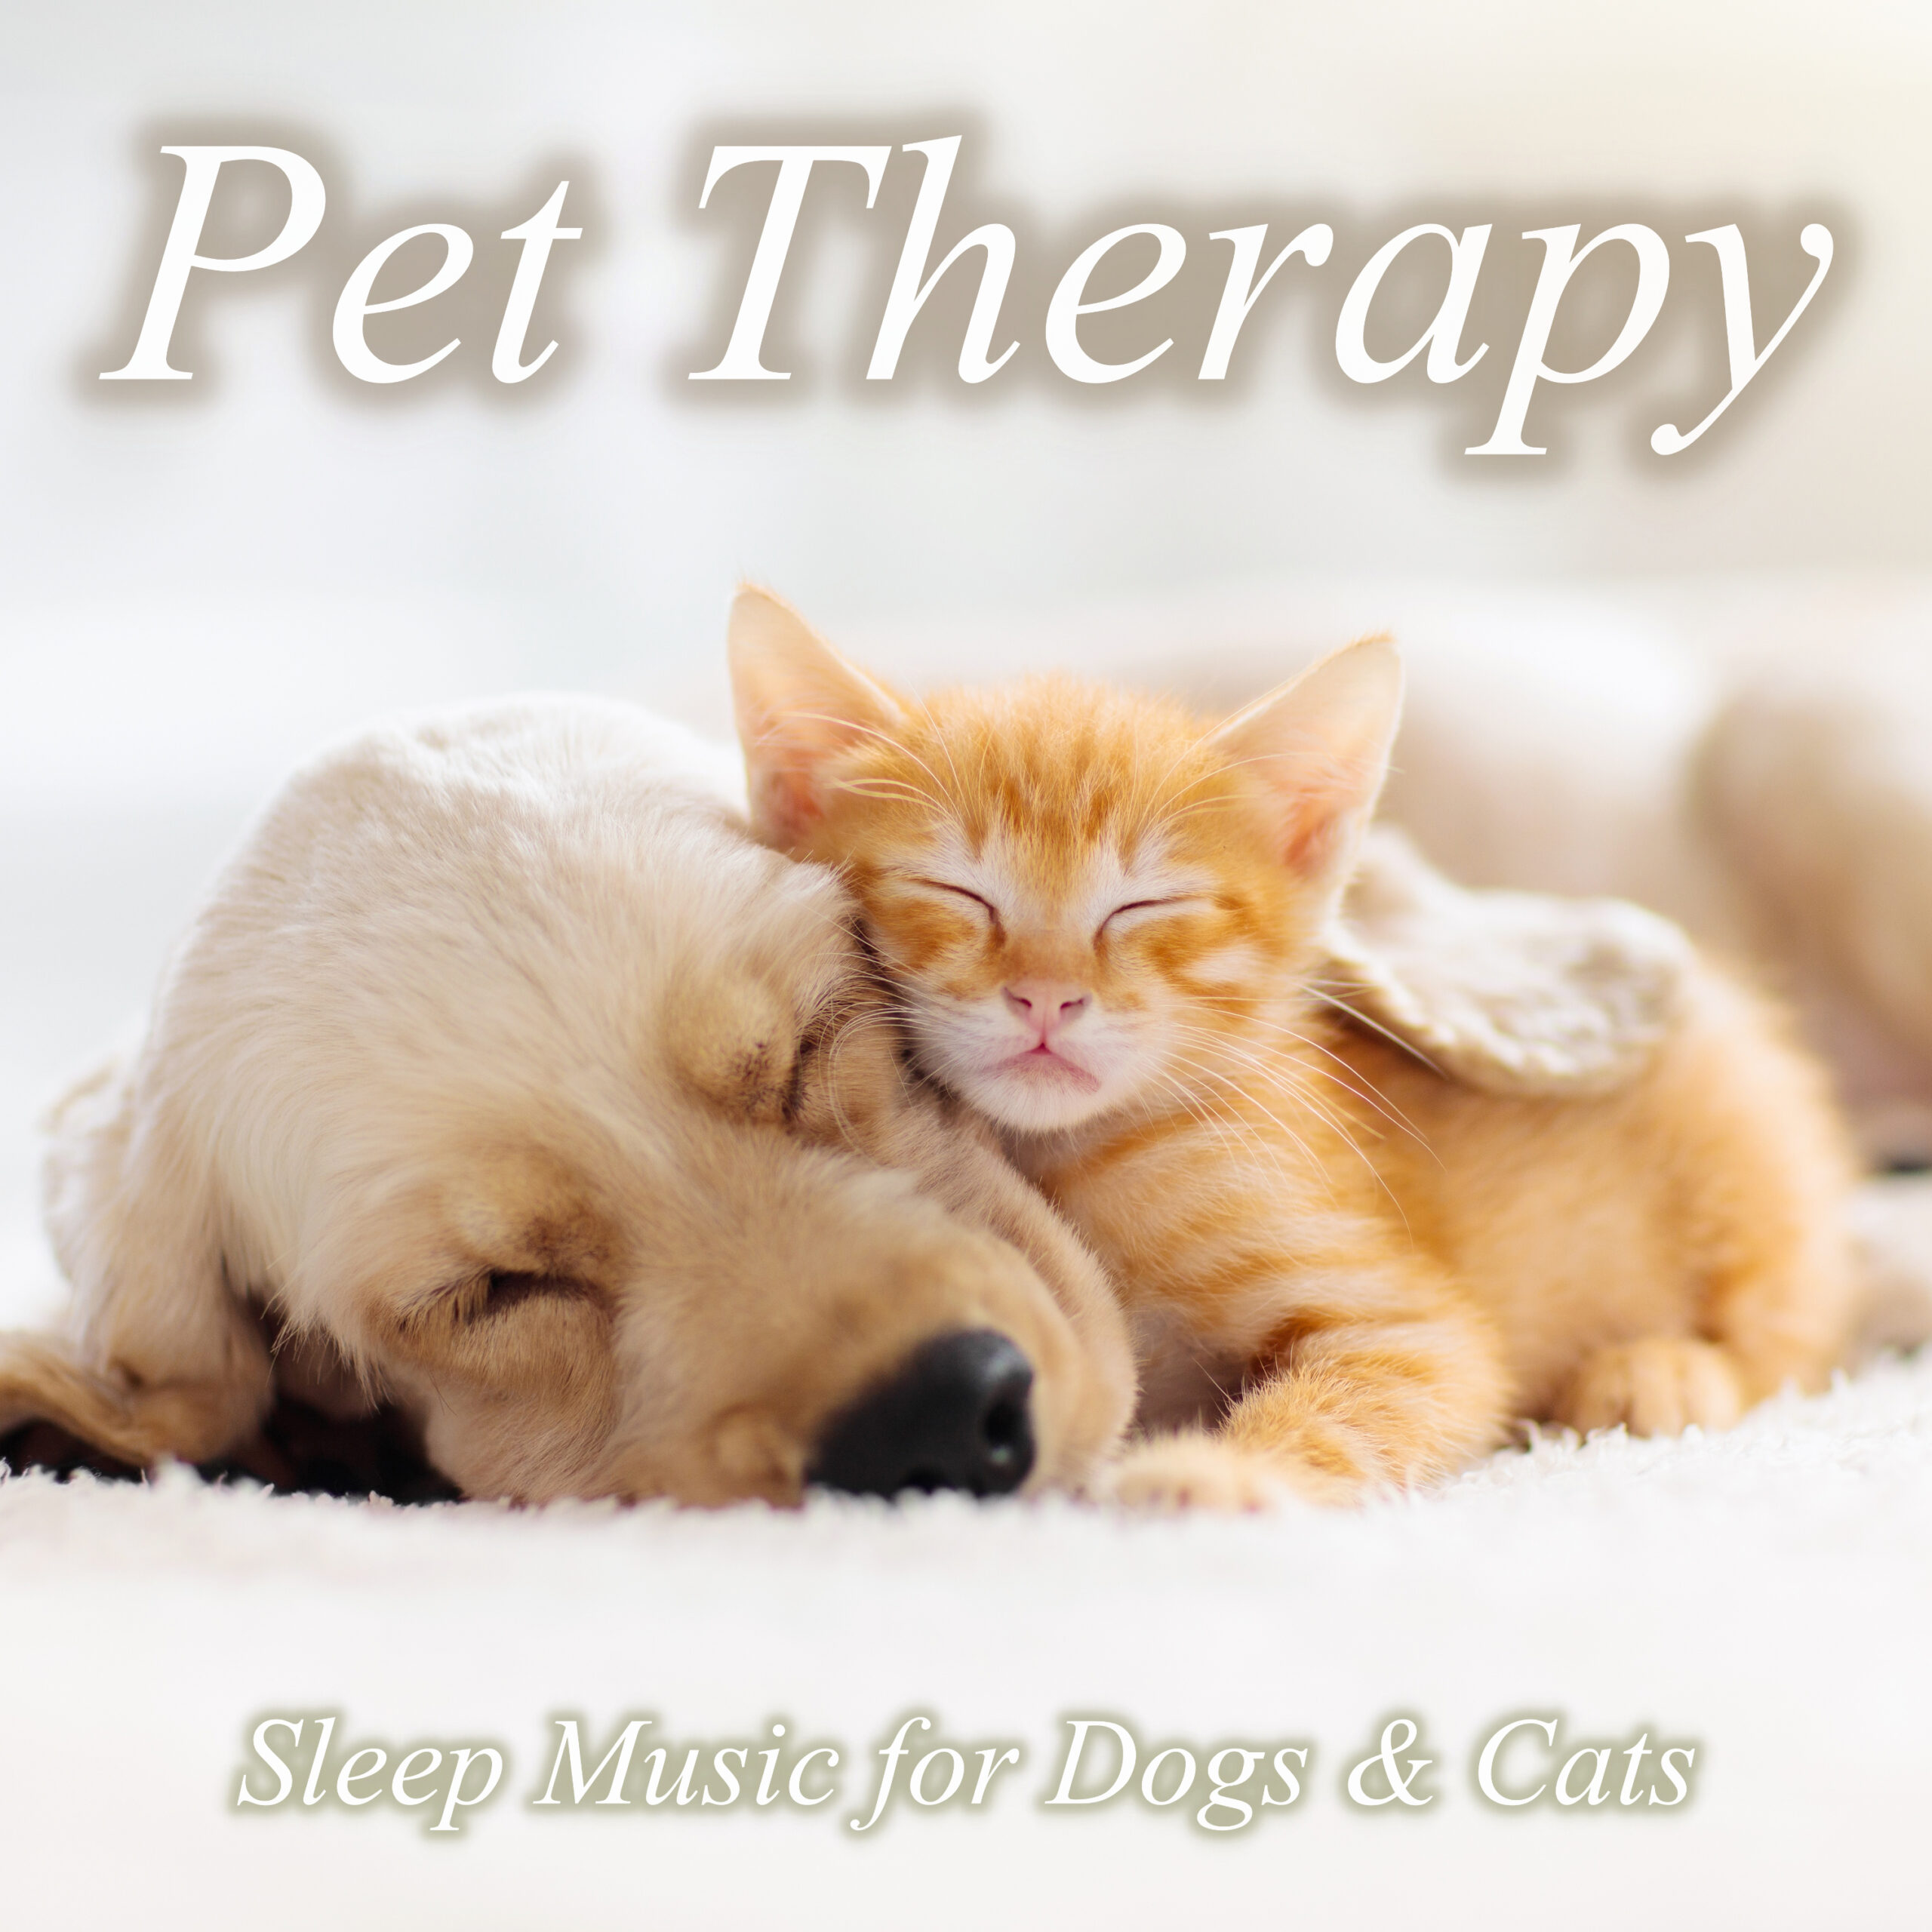 Pet Therapy Sleep Music for Dogs&Cats 川の音、森の音、鳥のさえずりの音と 癒しのオルゴールで猫ちゃん、ワンちゃんぐっすりのペット用睡眠音楽